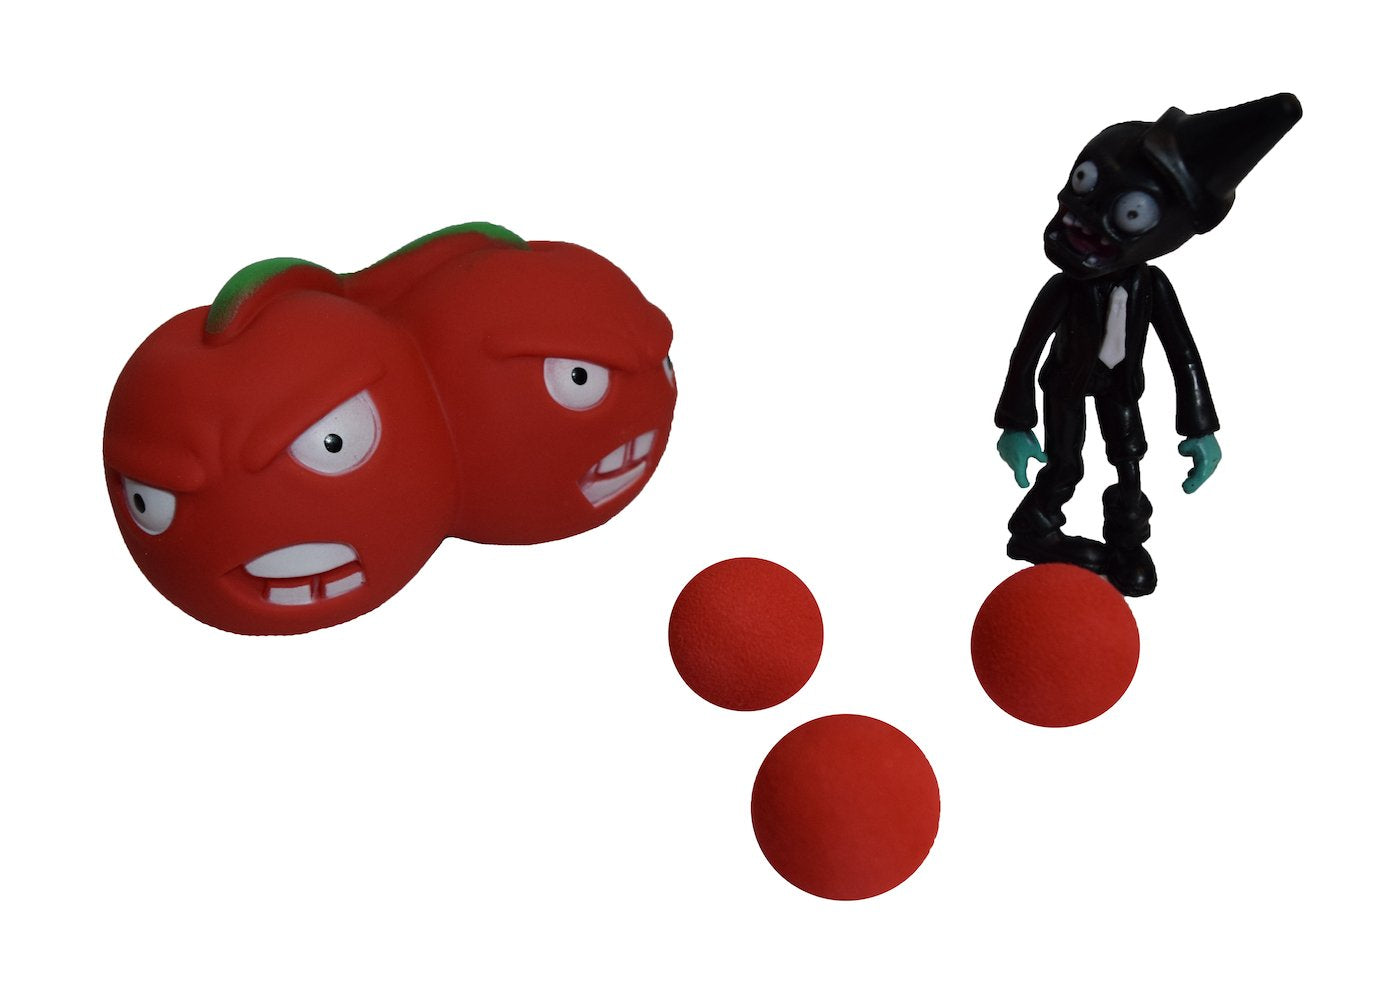 Party PVZ Plant Cherry Bomb Ball Popper Zombie Action Figure Toy